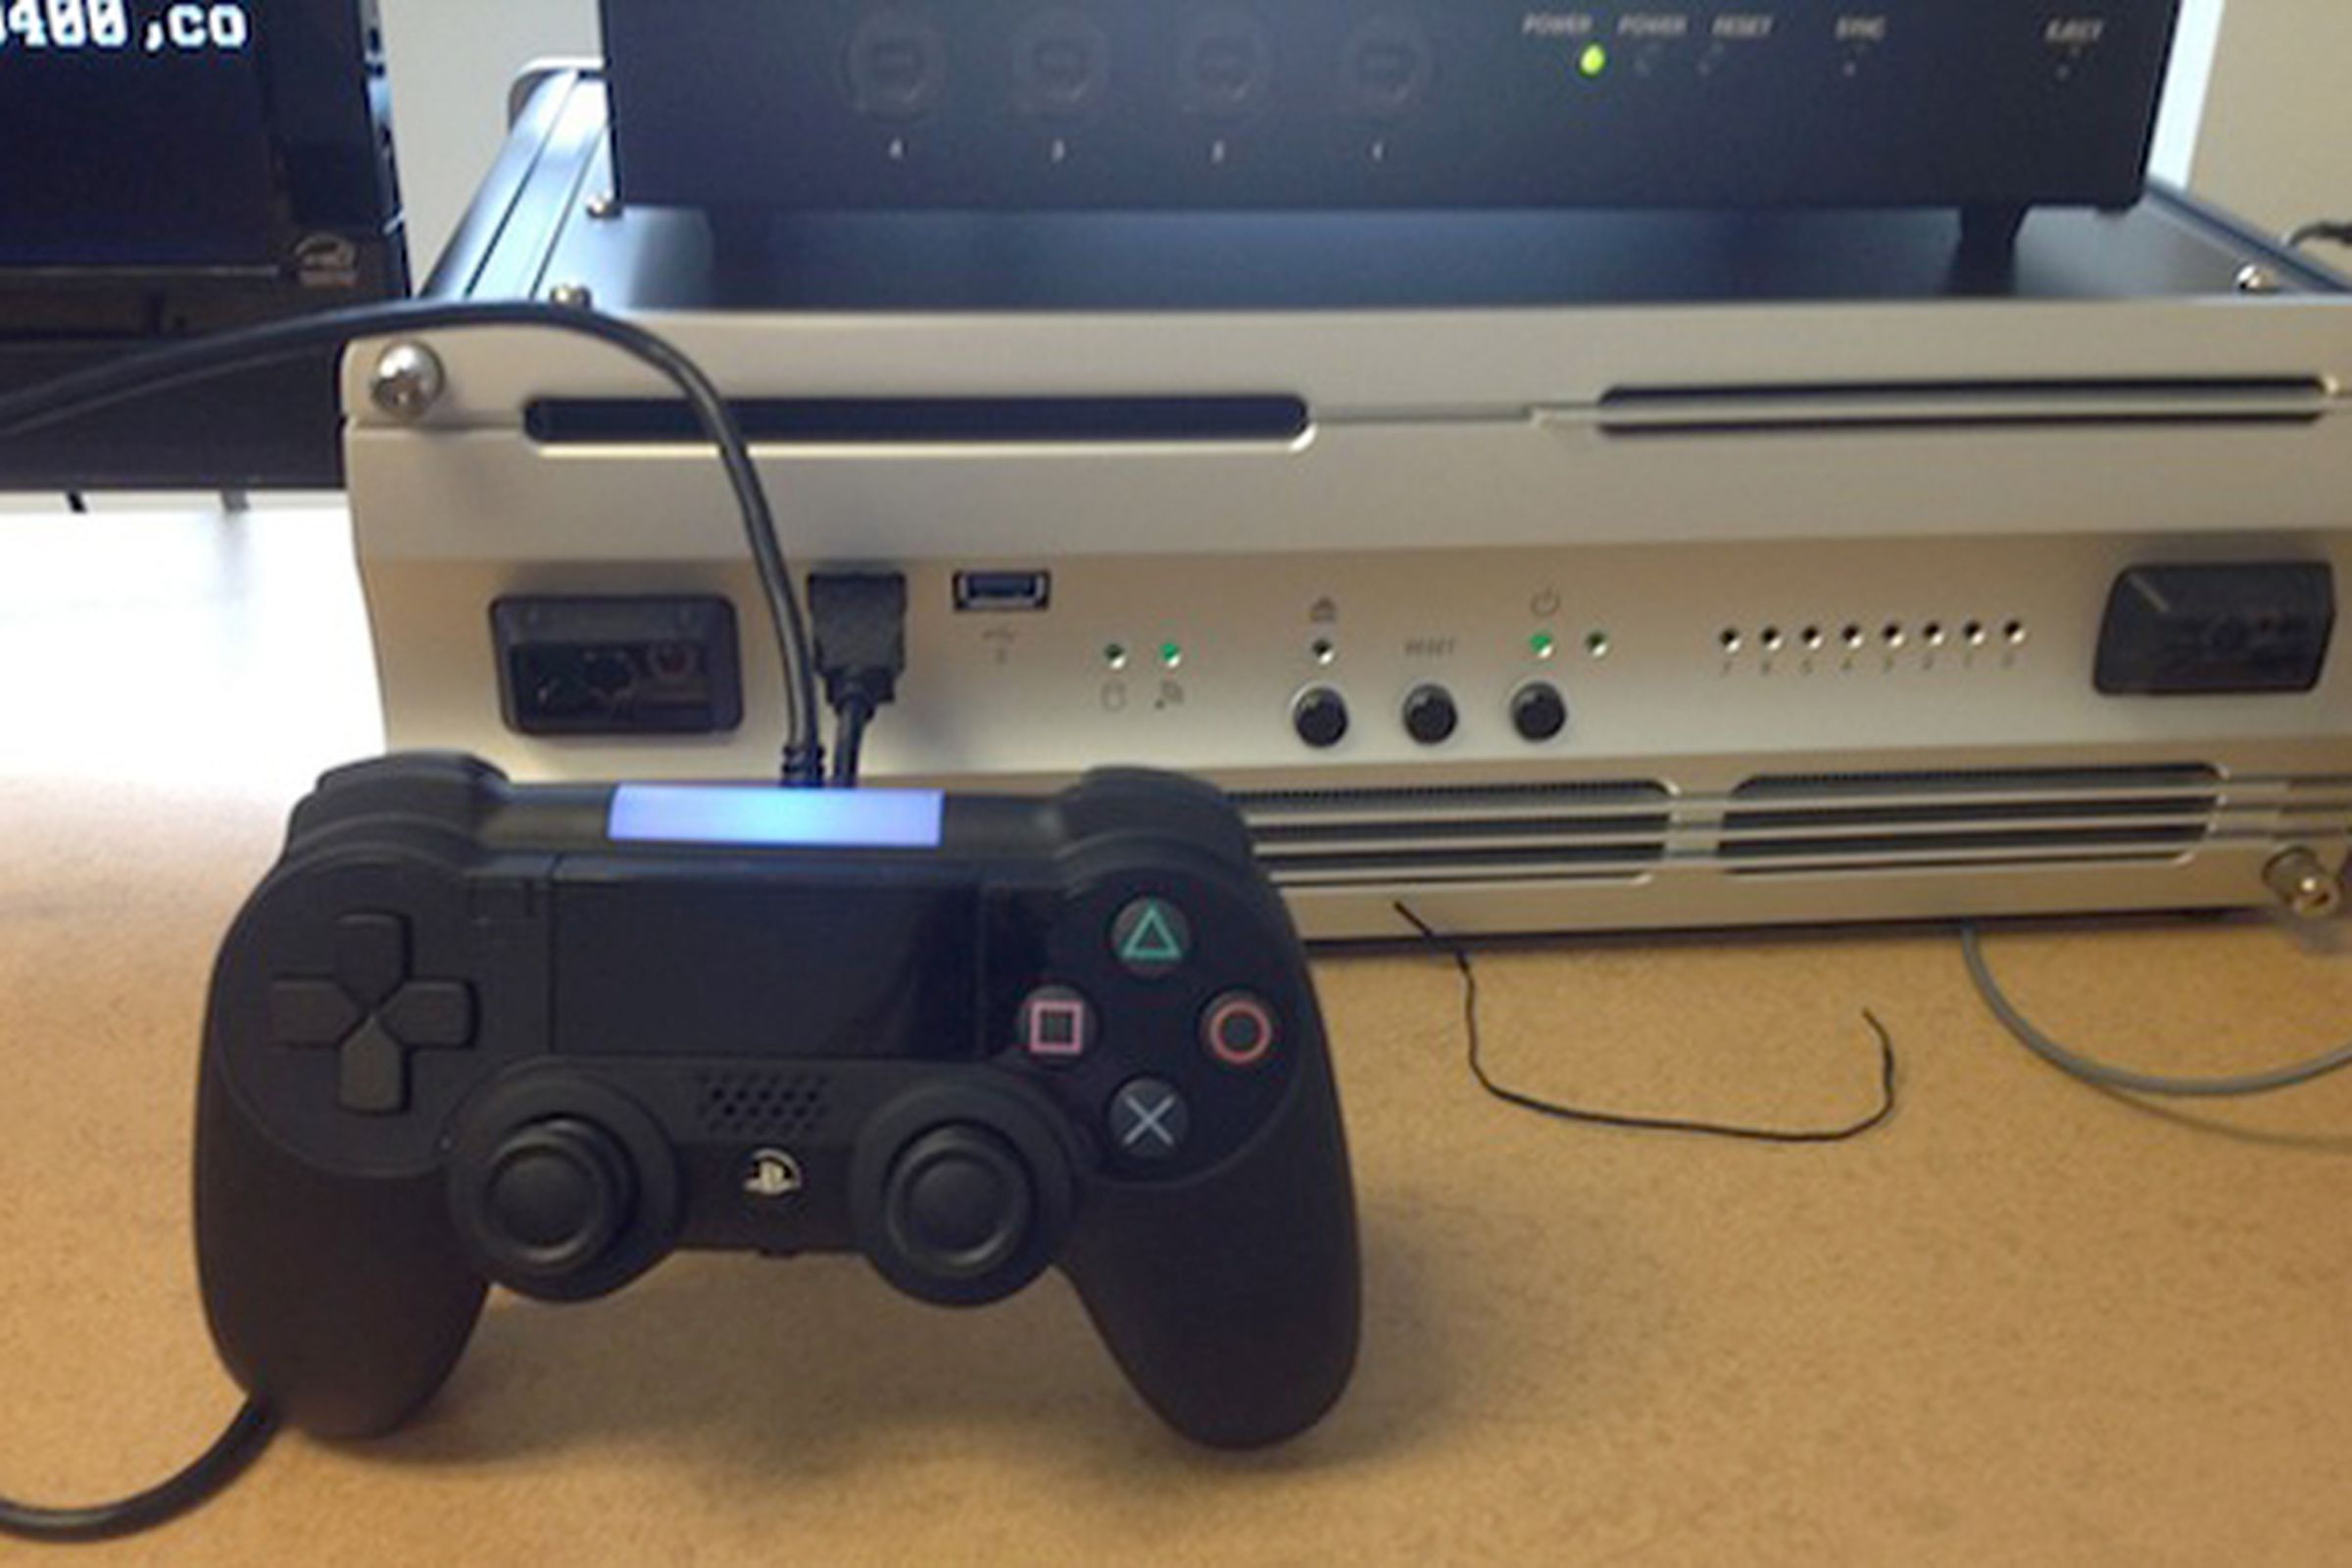 PlayStation 4 controller prototype leak (Destructoid)